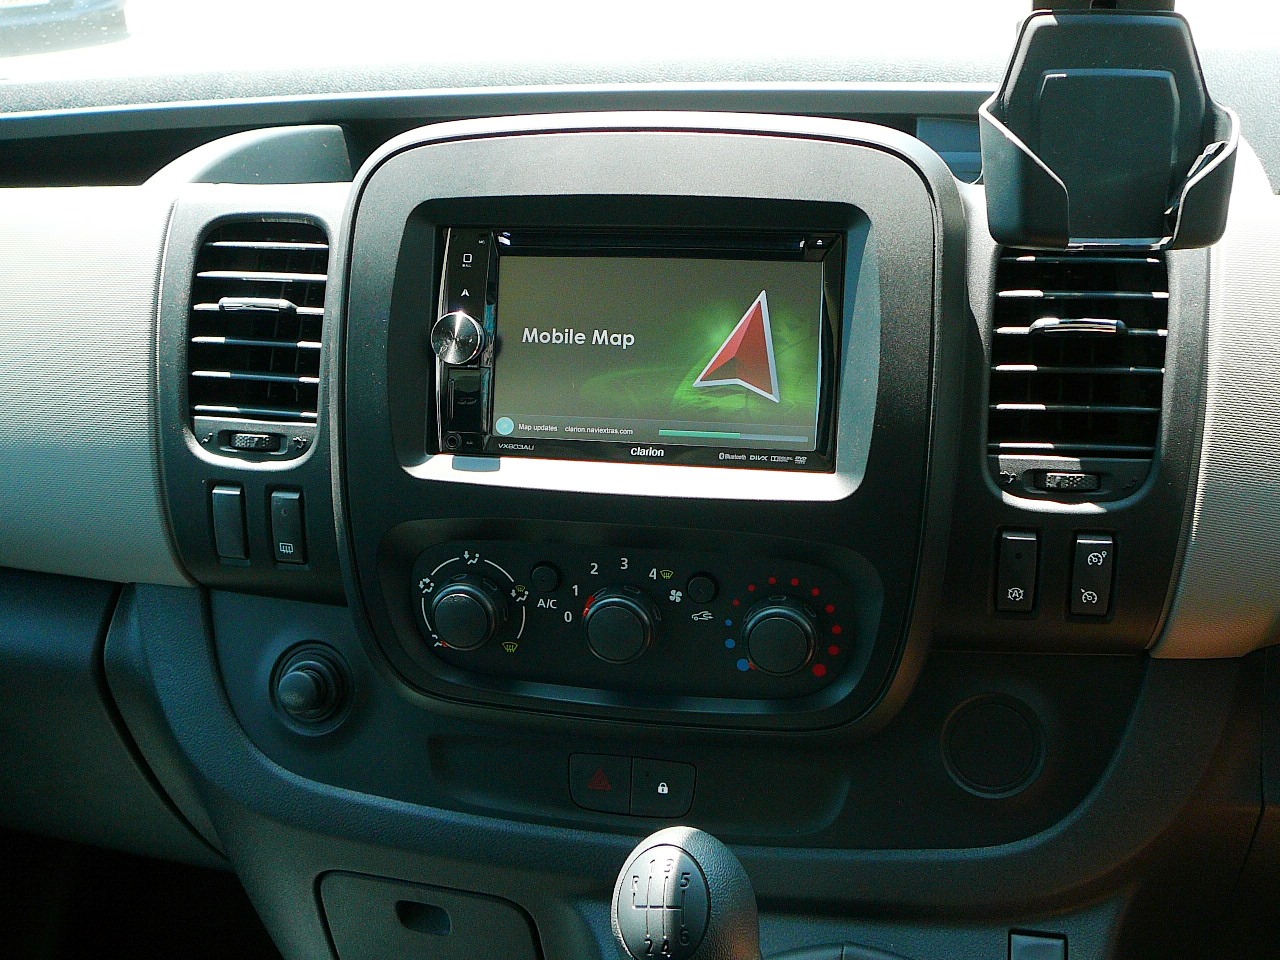 Renault Trafic 2015, Clarion VX603 In Dash GPS Navigation